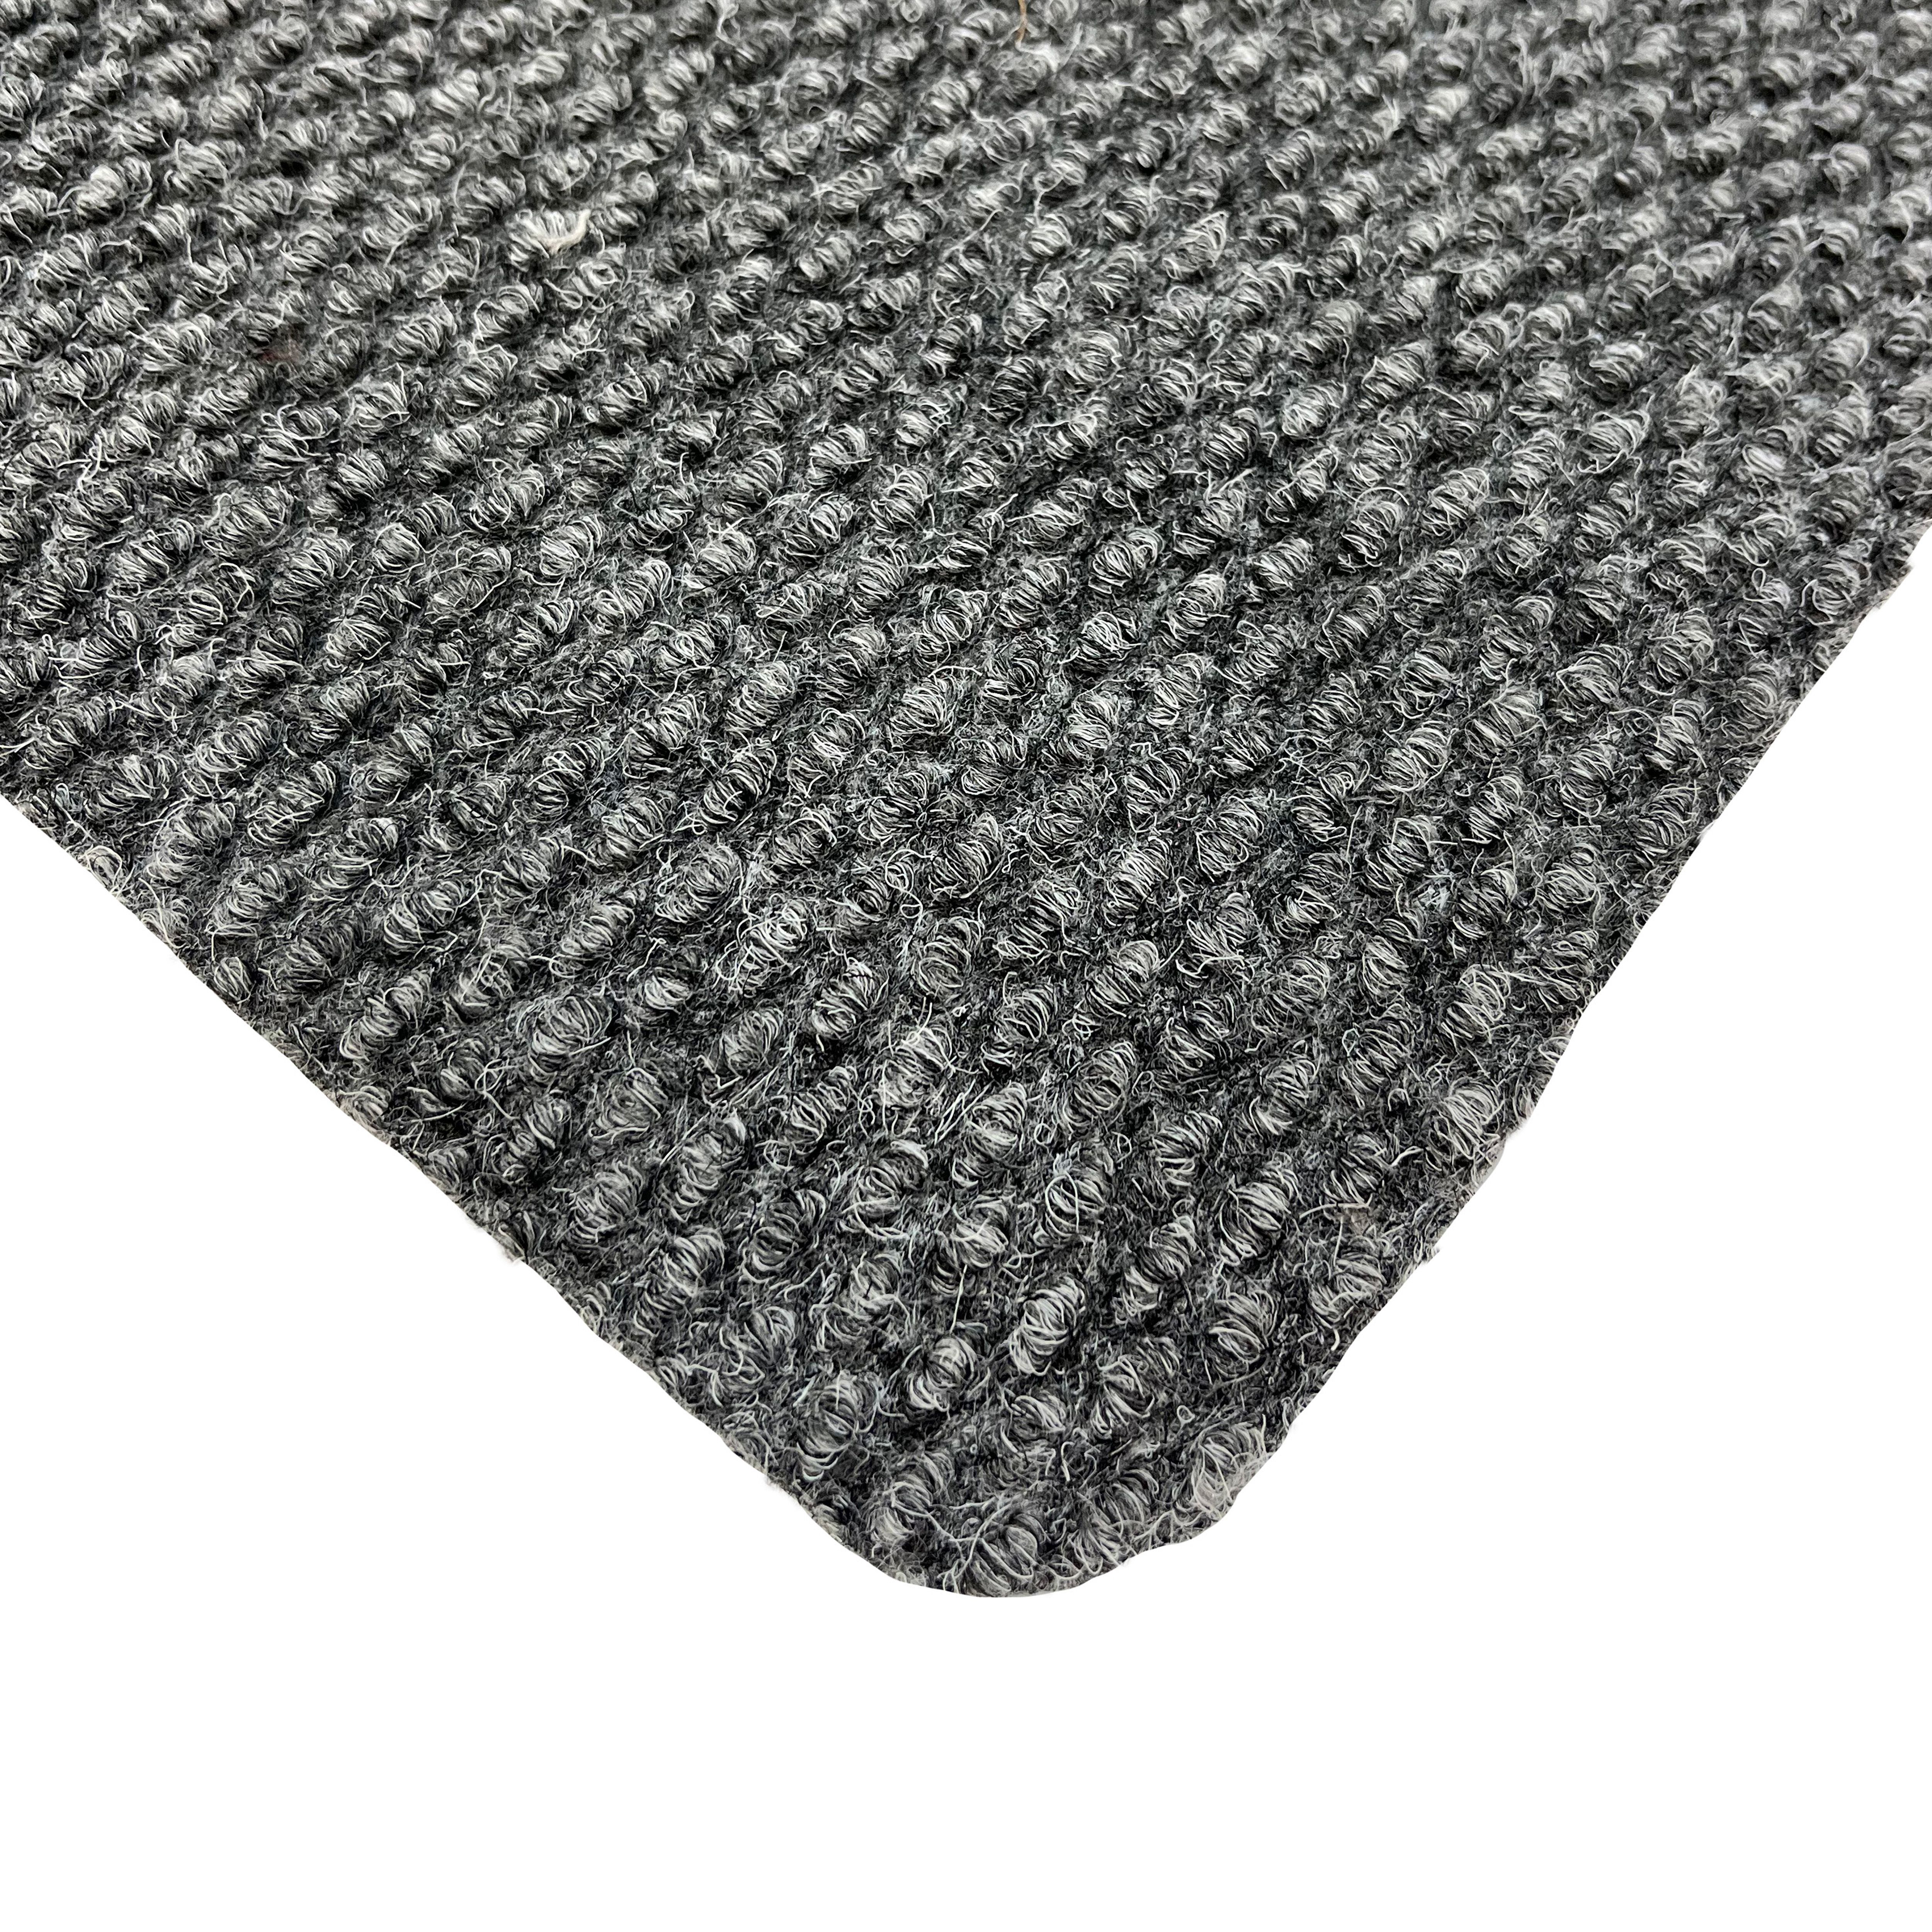 Flooring Grey Plain Scraper mat, 120cm x 50cm